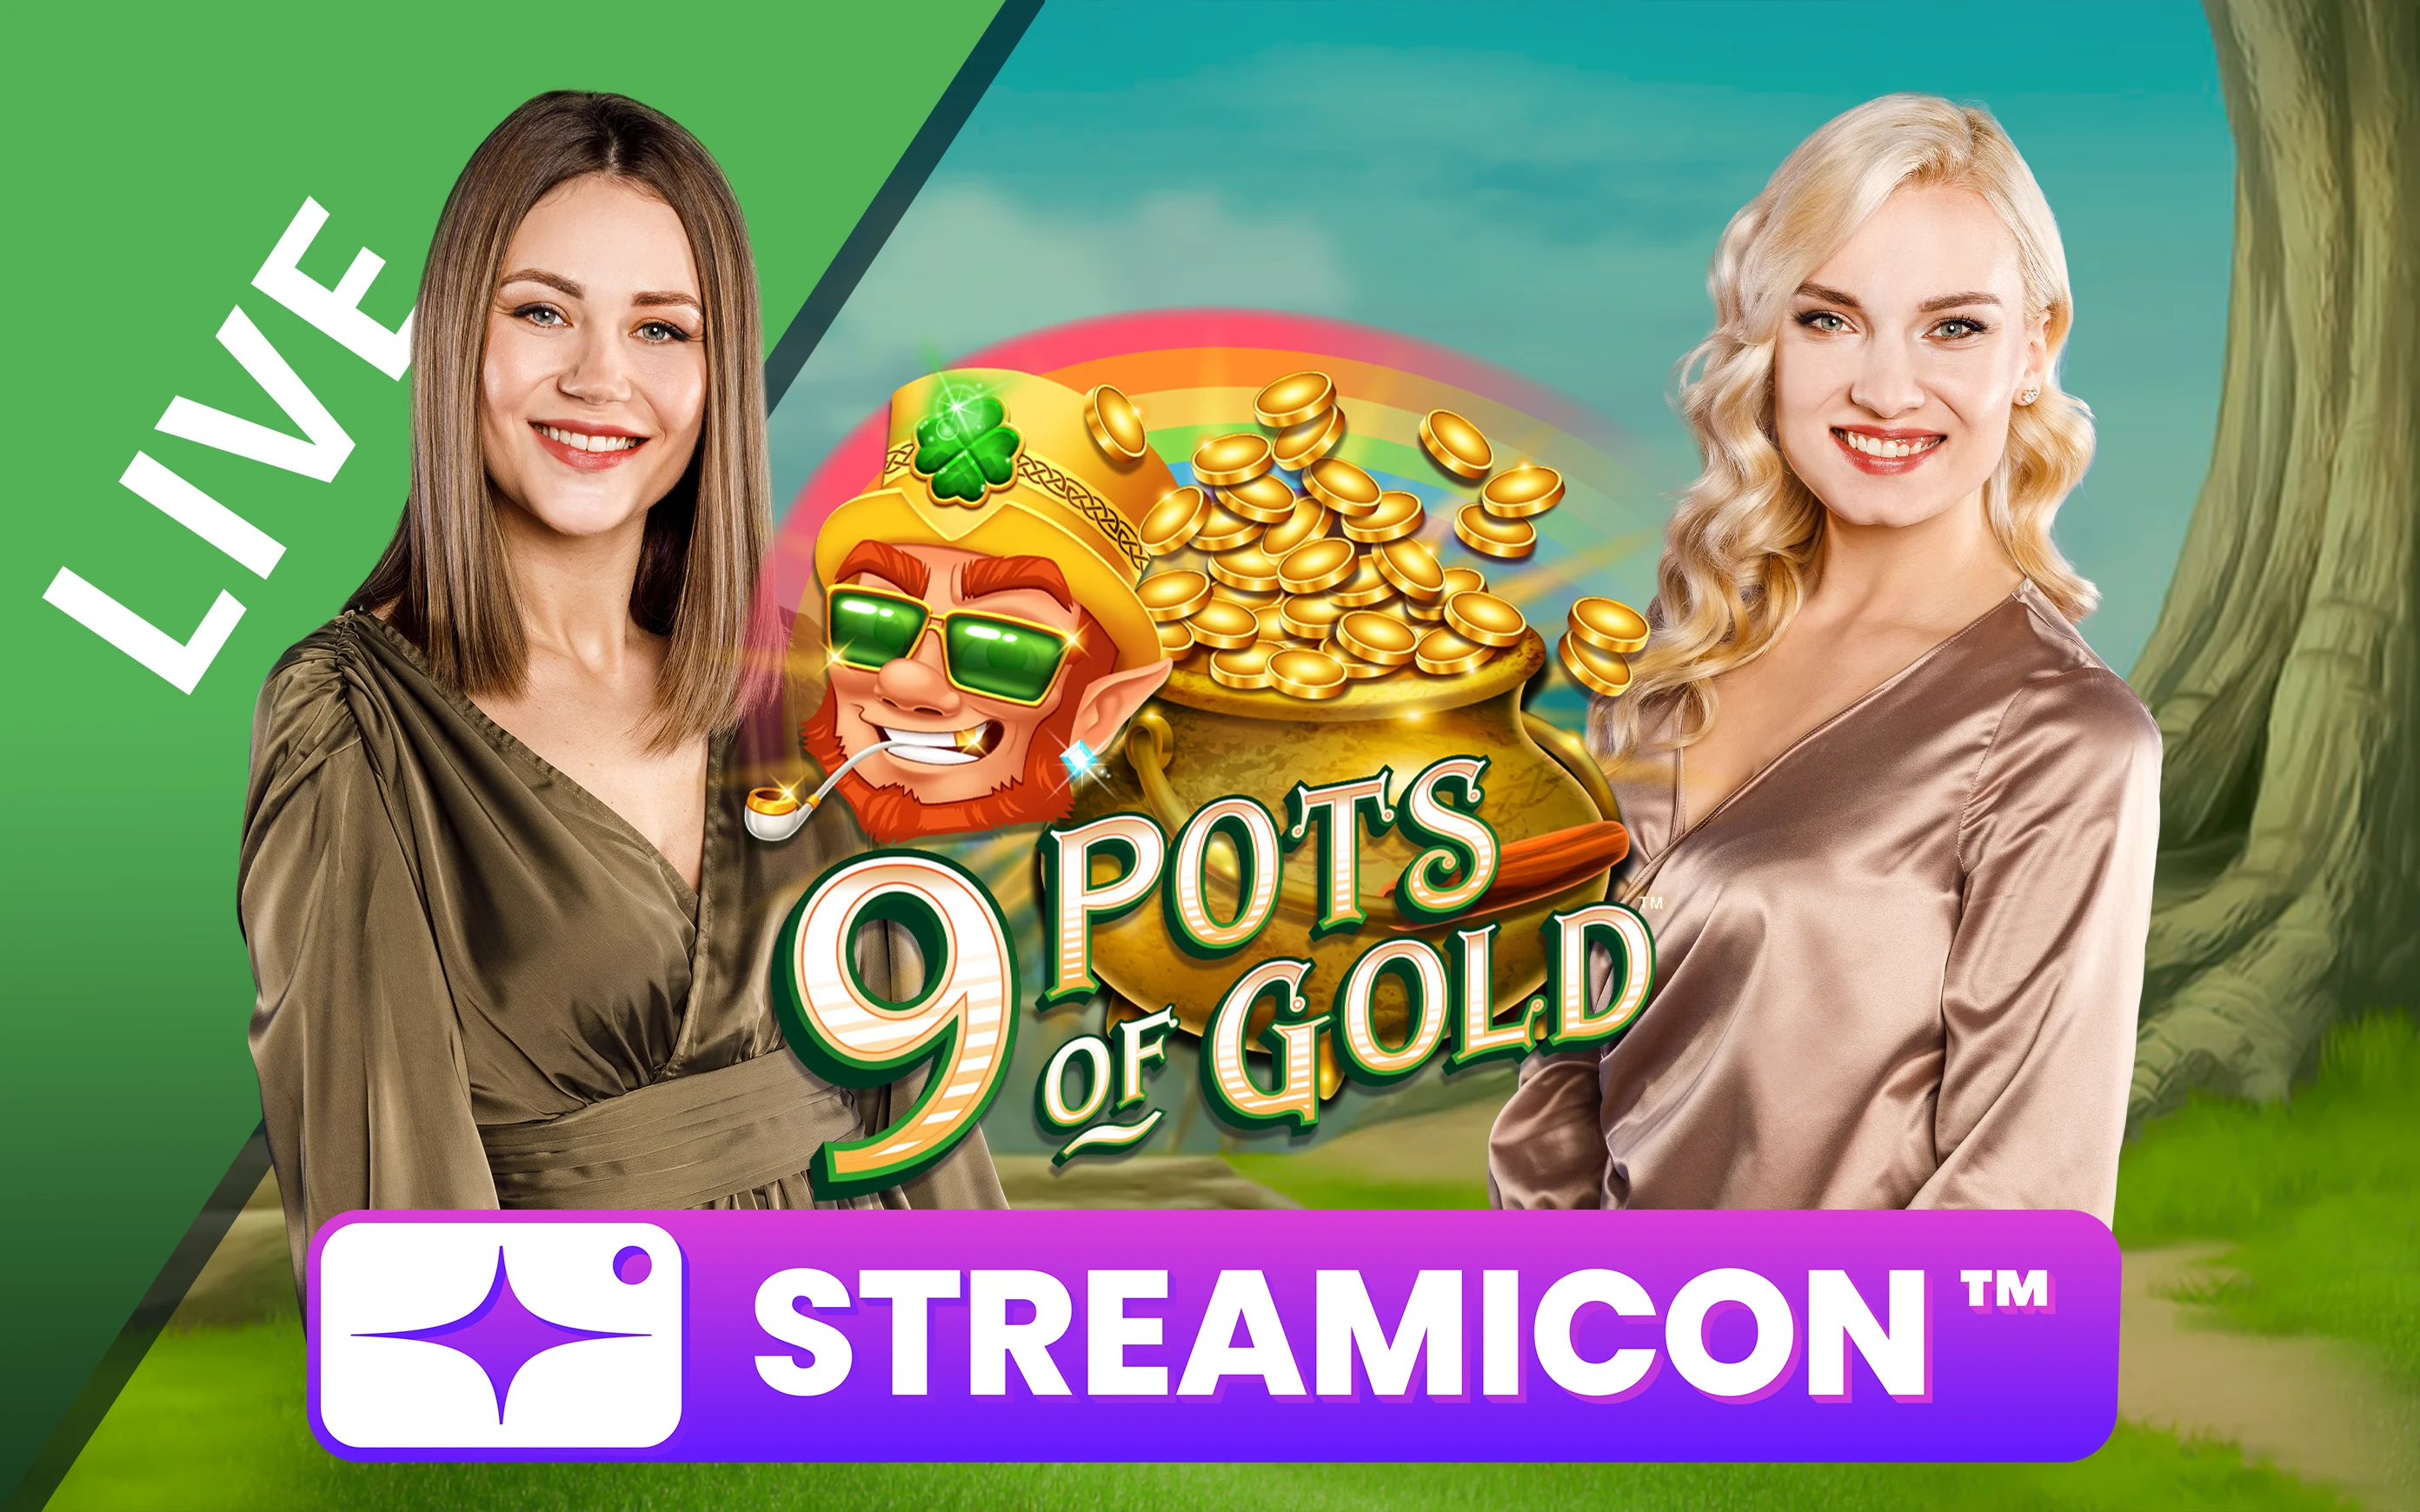 Jogue 9 Pots of Gold™ Streamicon™ no casino online Starcasino.be 